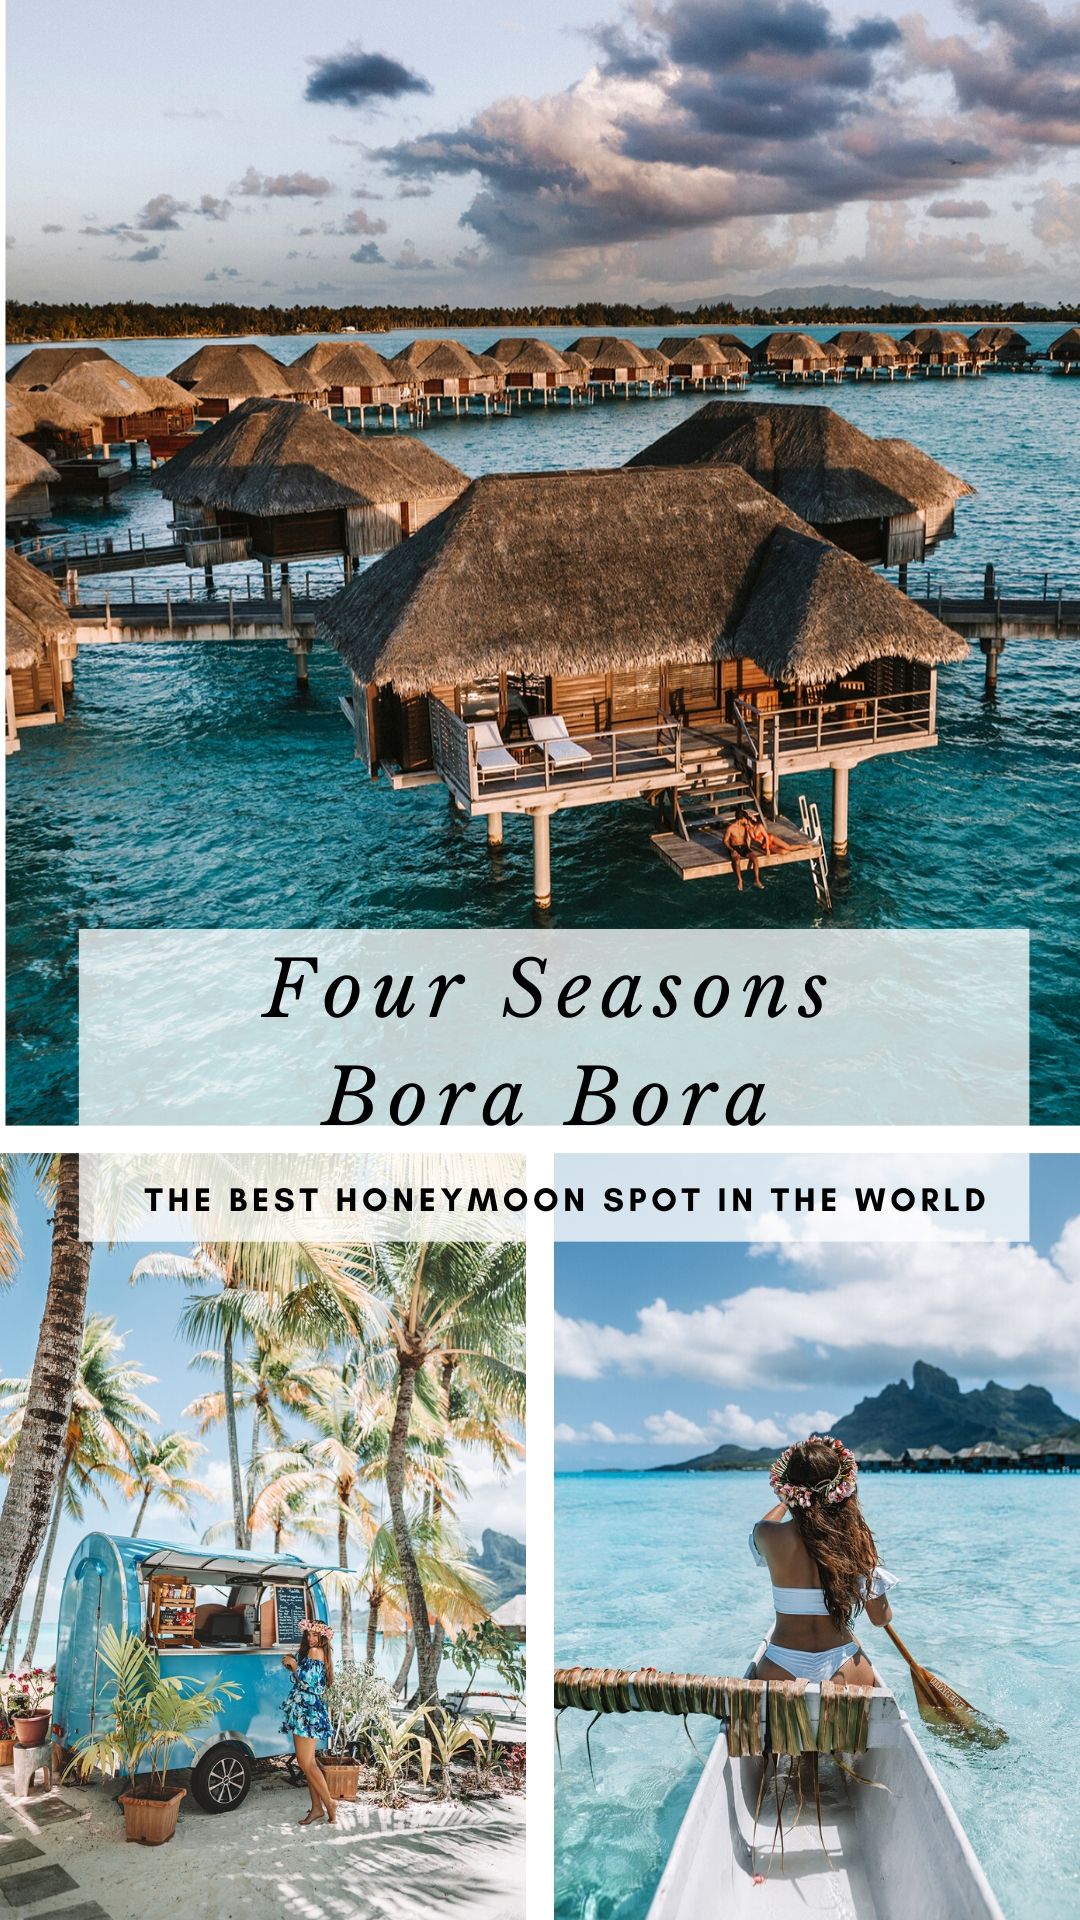 Four Seasons Bora Bora Resort is the perfect spot for a honeymoon in Bora Bora. Click here for the full guide to Four Seasons Bora Bora! #borabora #honeymoon #bucketlist #travel | Bora Bora honeymoon bungalows | Bora Bora honeymoon romantic getaways | Bora Bora honeymoon pictures | Bora Bora honeymoon resorts | Bora Bora honeymoon things to do in | Bora Bora honeymoon couple | Bora Bora honeymoon Four Seasons | Bora Bora honeymoon bungalows glass floor | Bora Bora bungalow Four Seasons interior